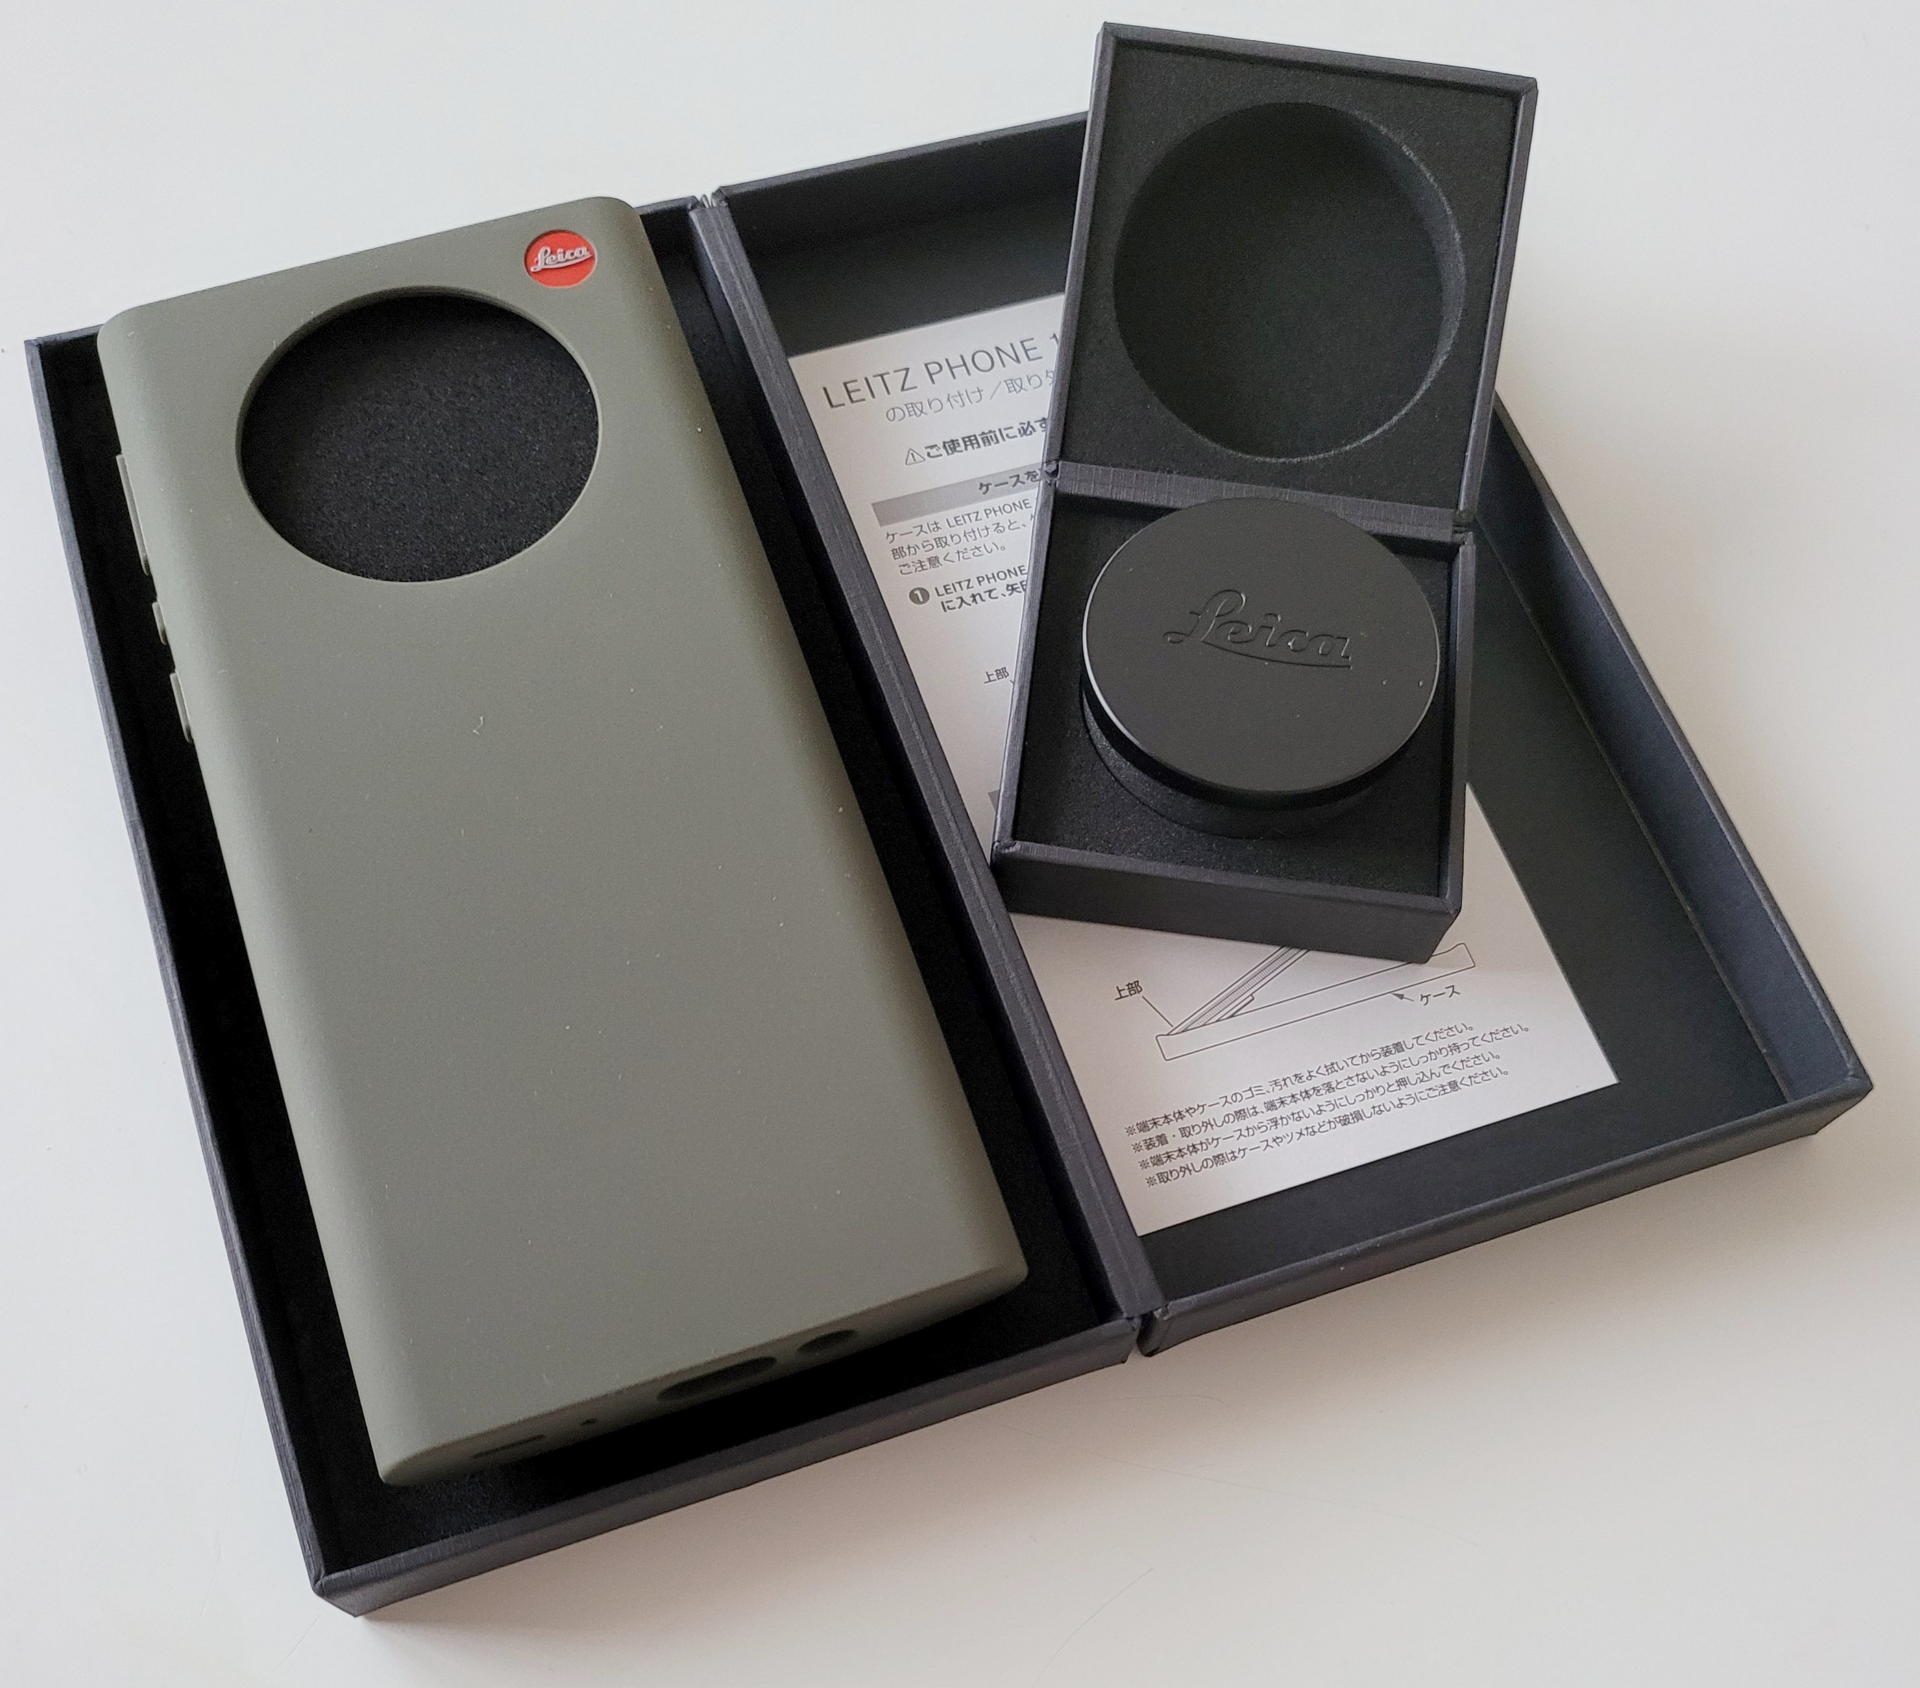 Leitz Phone 1の色違いシリコン製ケースとレンズキャップを買って